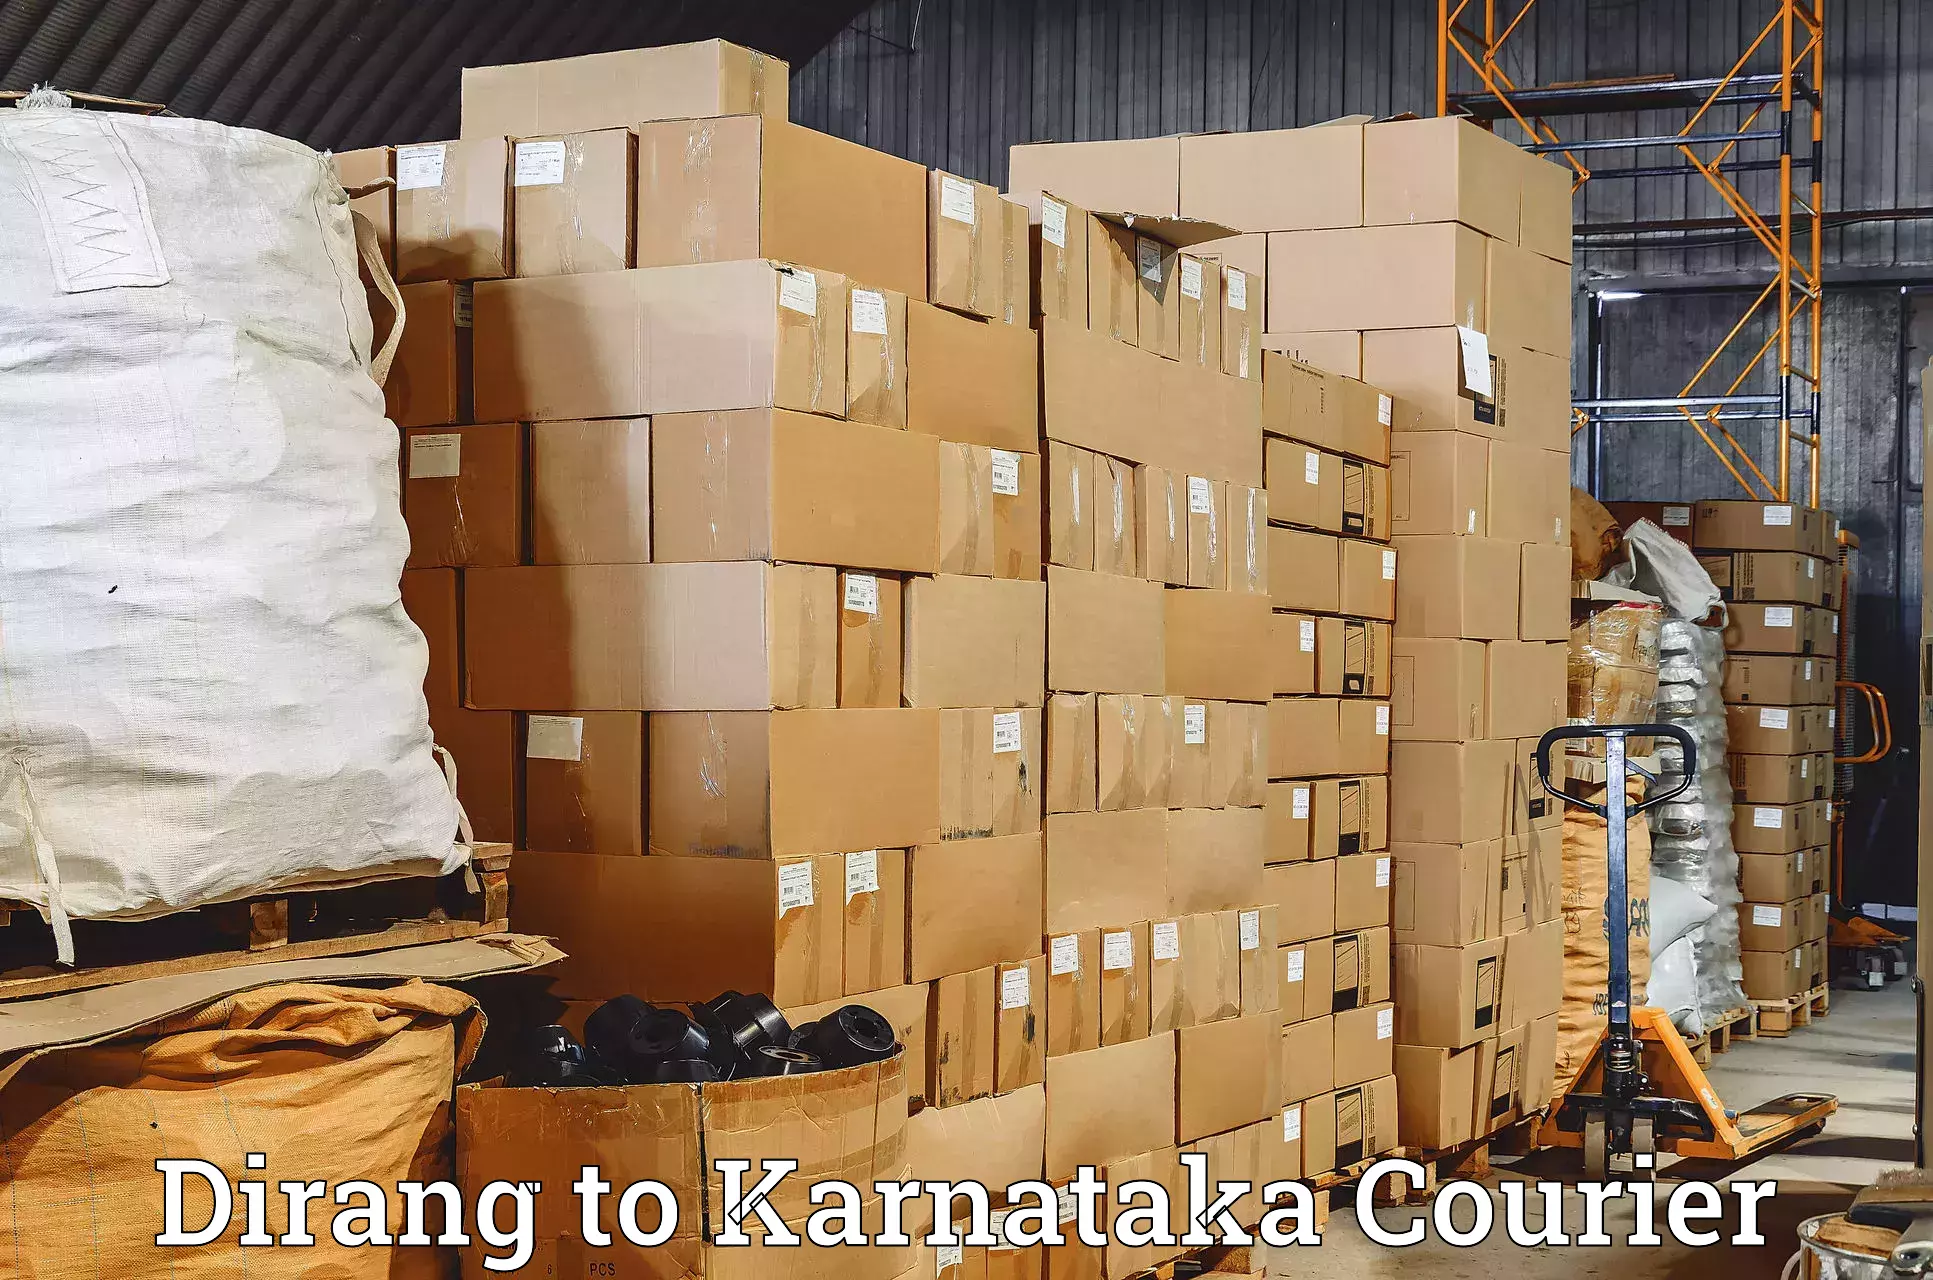 State-of-the-art courier technology Dirang to Karwar